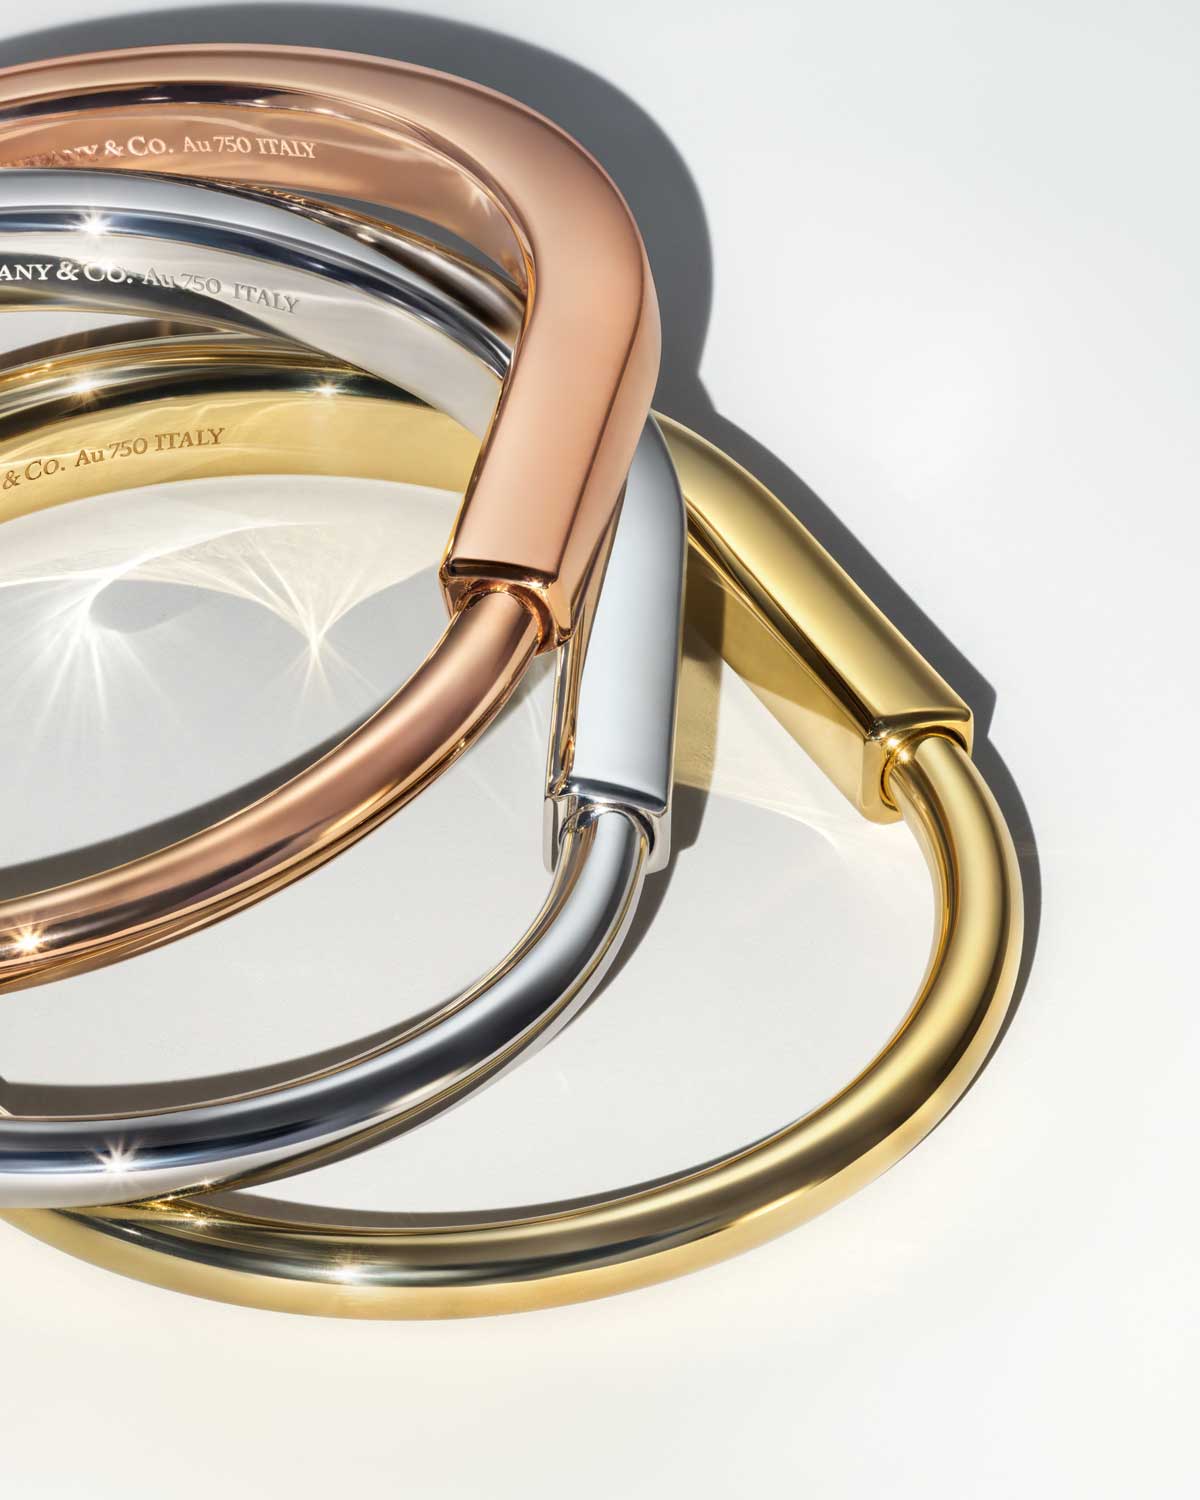 MANIFESTO - LOOK MA, NO KEYS: Tiffany & Co.'s Lock Bracelets